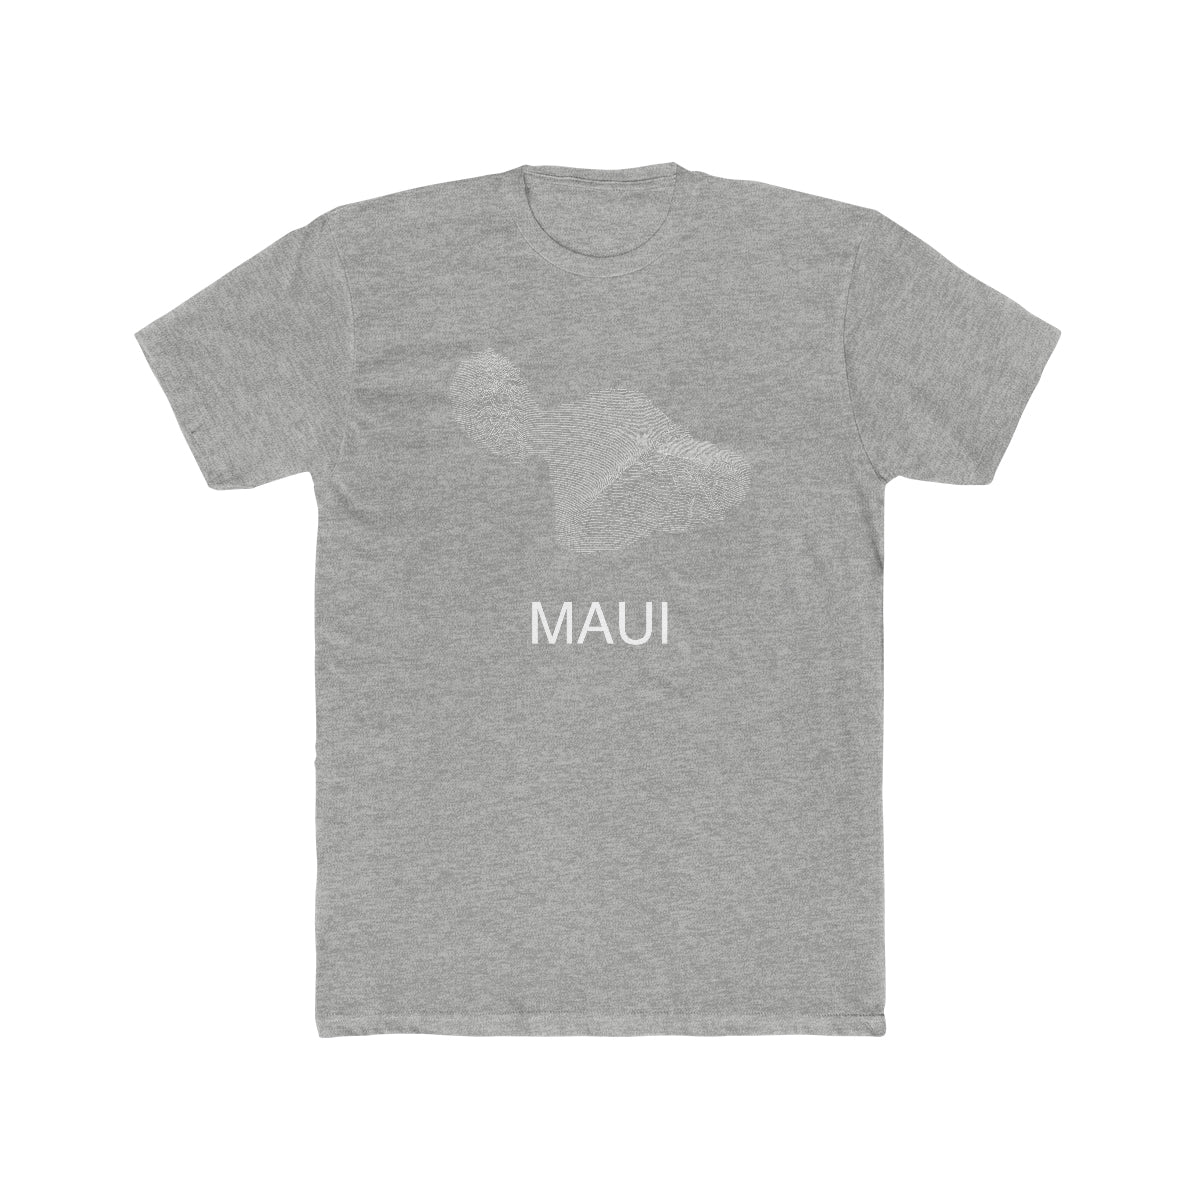 Maui T-Shirt Lines